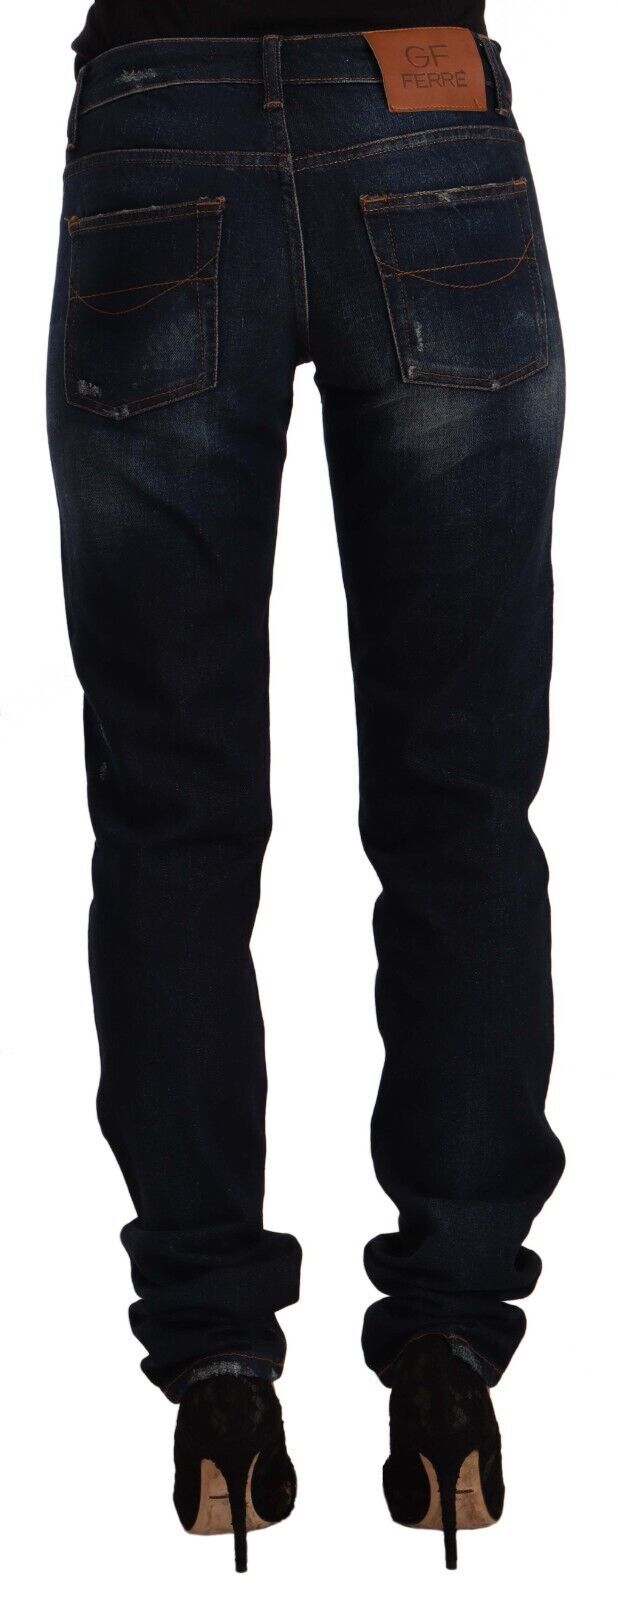 GF Ferre Chic Mid-Waist Skinny Jeans in Dark Blue Wash